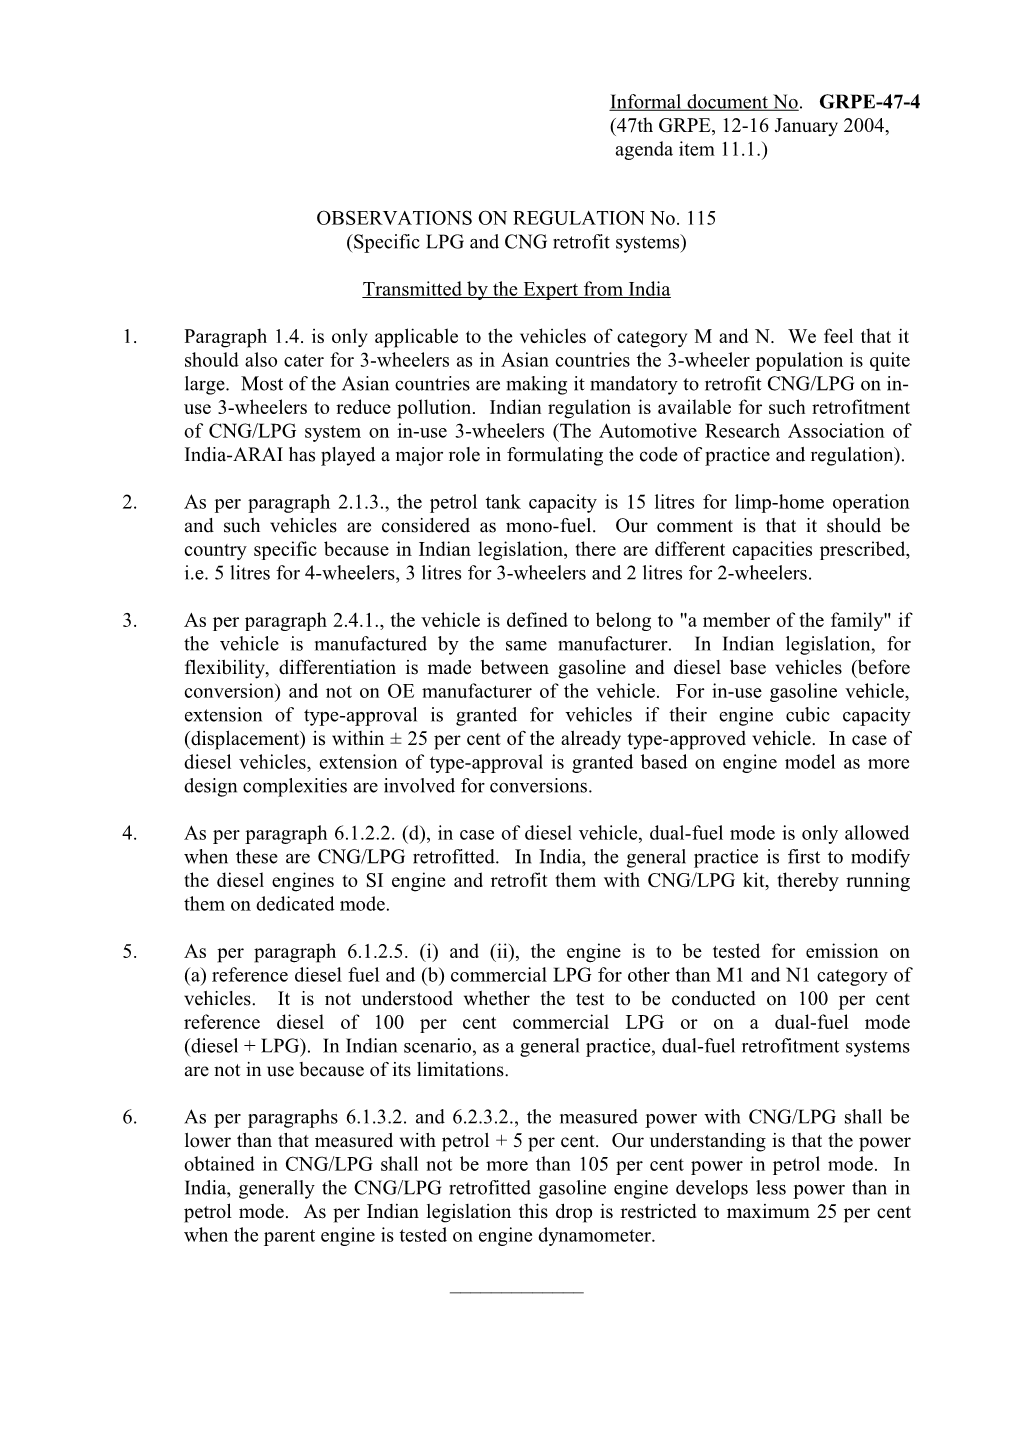 Observations to the UN/ECE LPG/ CNG Retrofit Systems Regulation No. 115